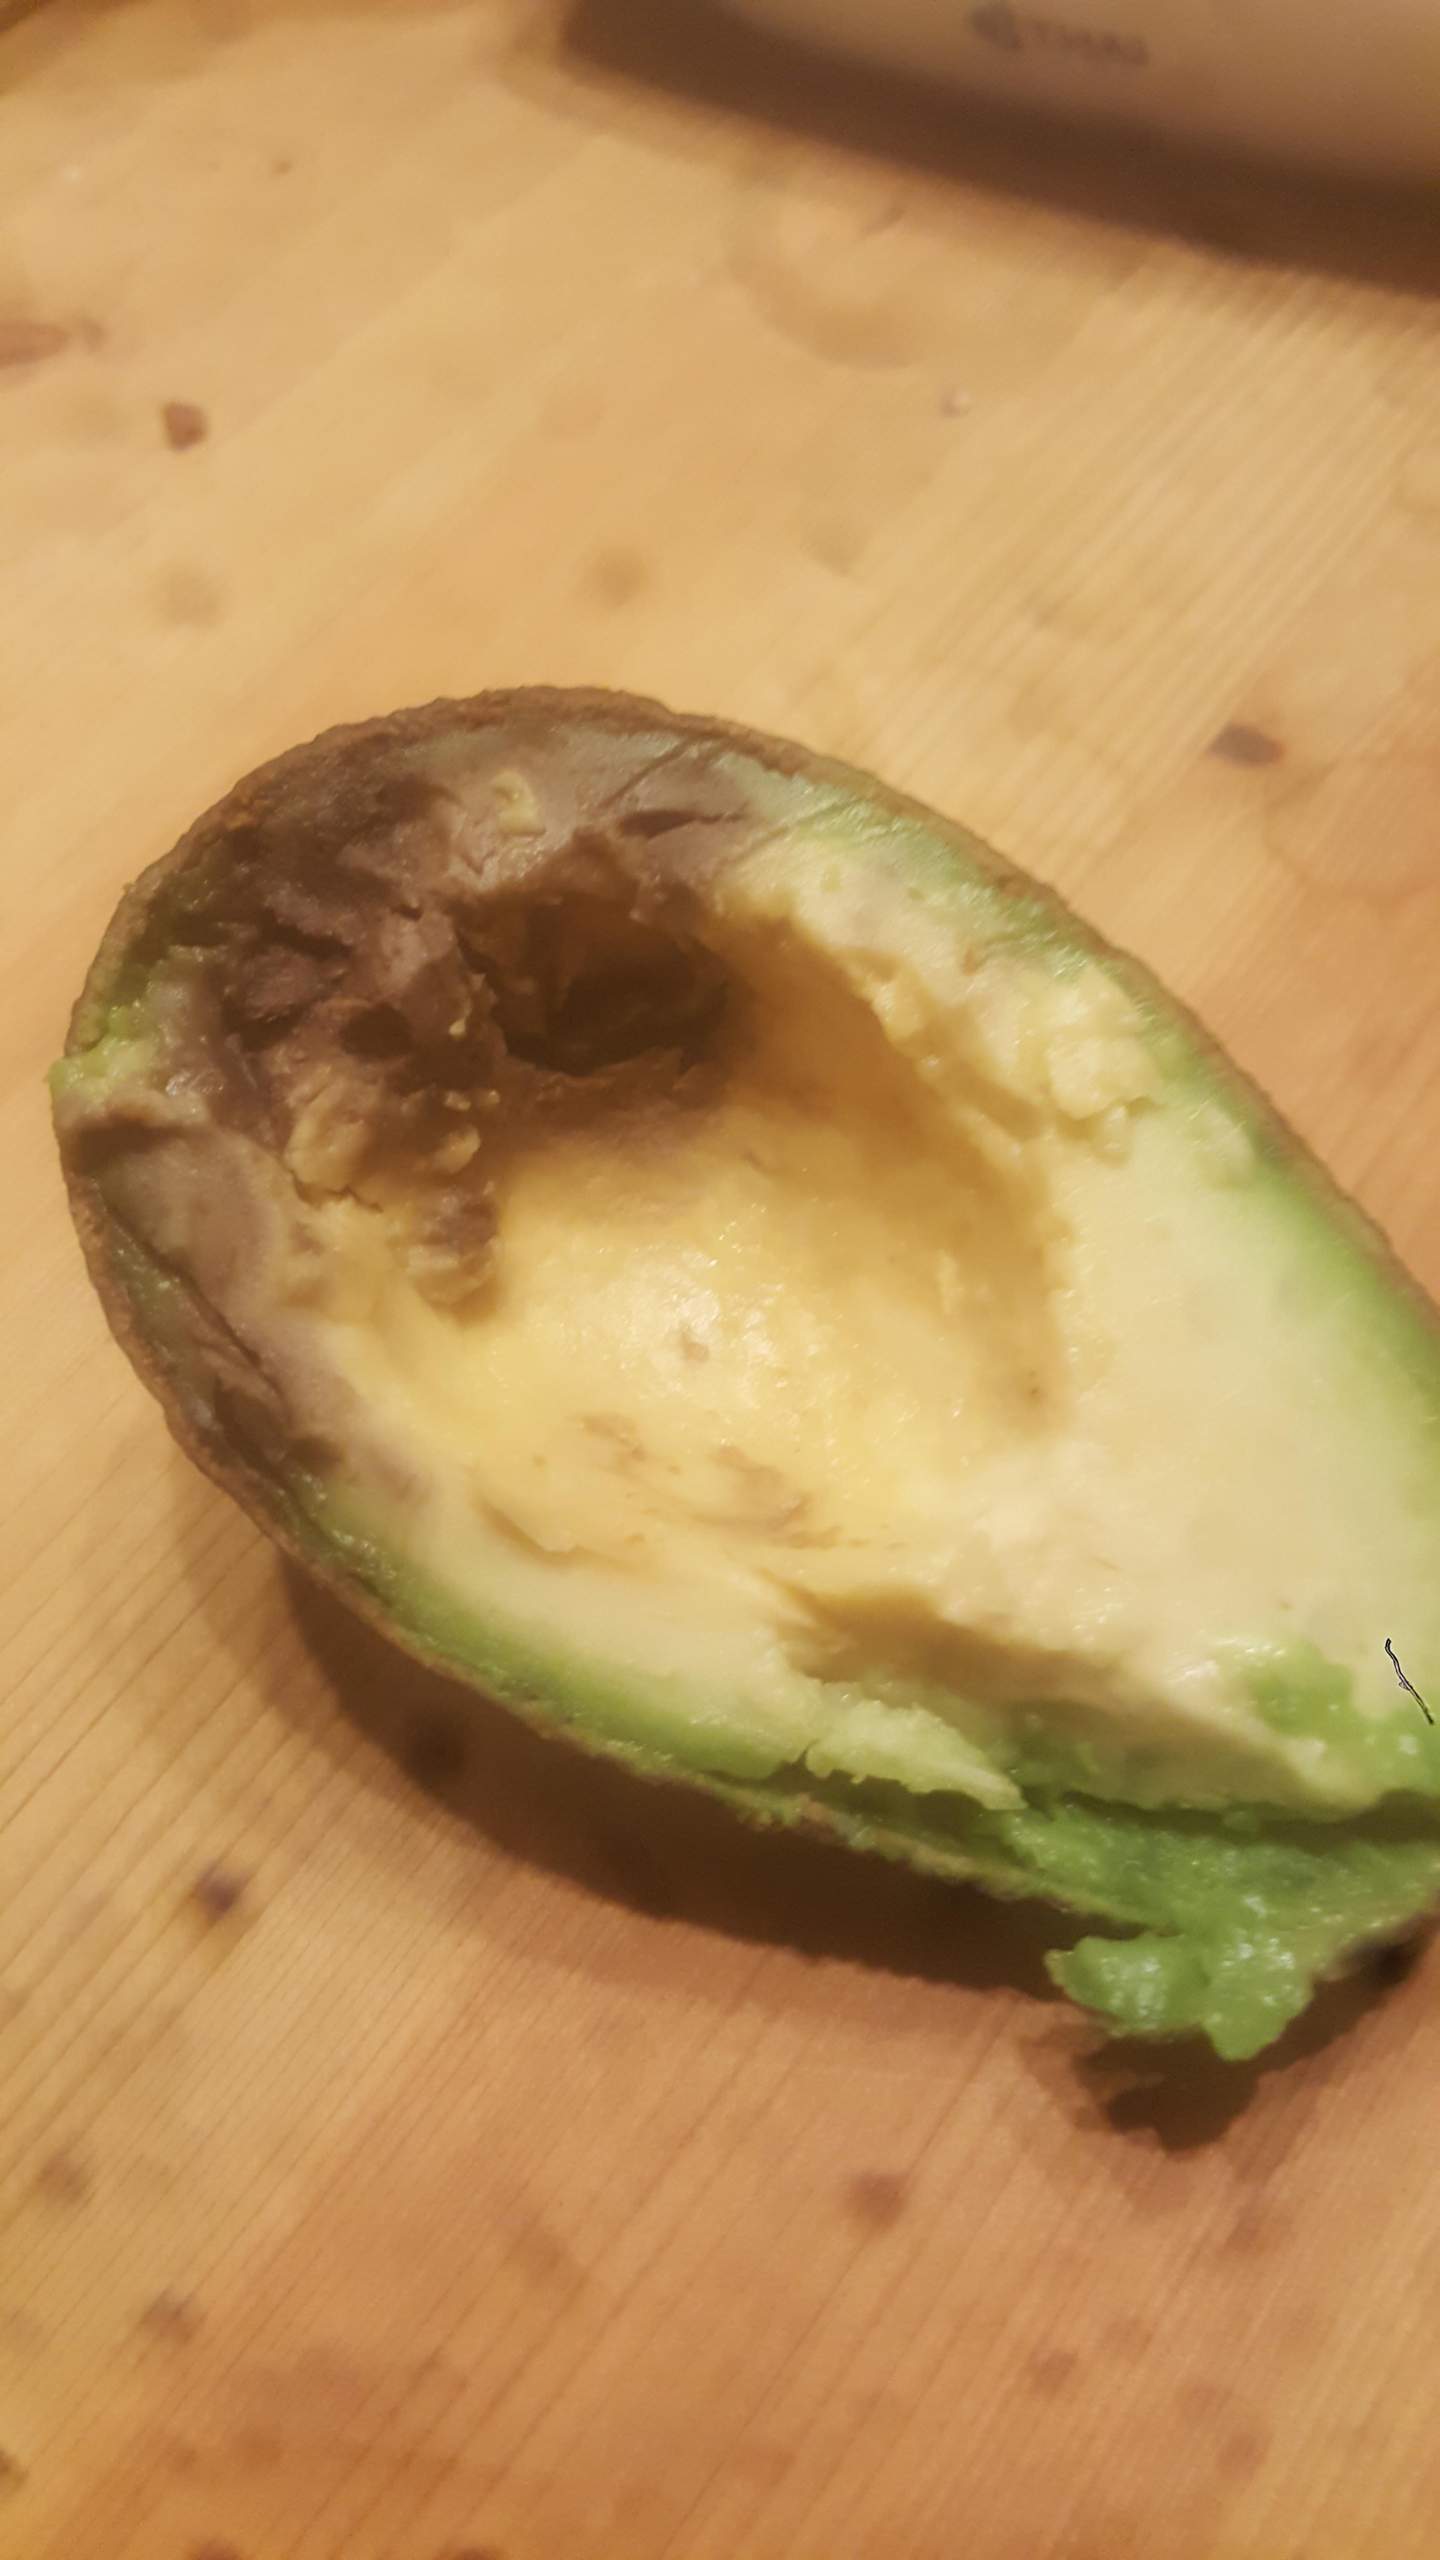 Avocado hat braune punkte